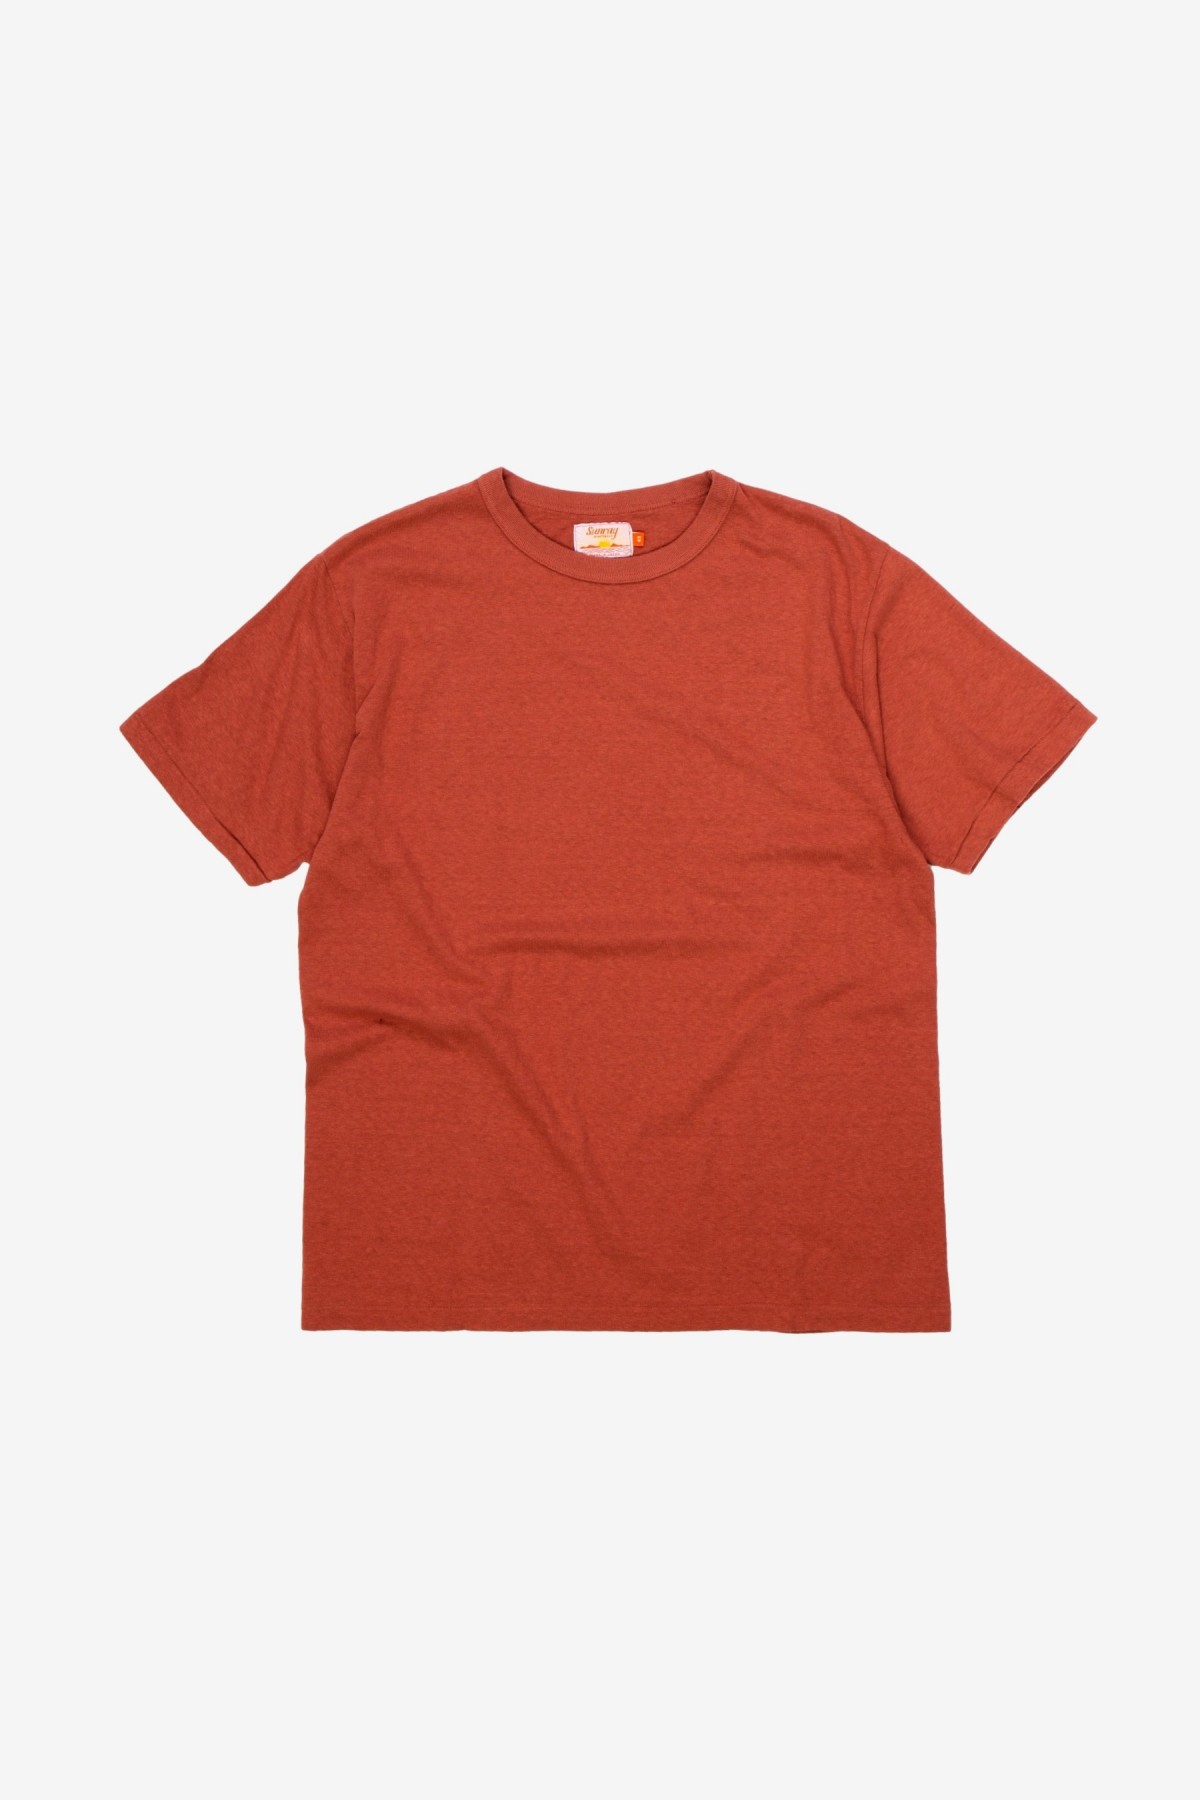 Sunray Sportswear Haleiwa Short Sleeve T-Shirt in Spiced Apple